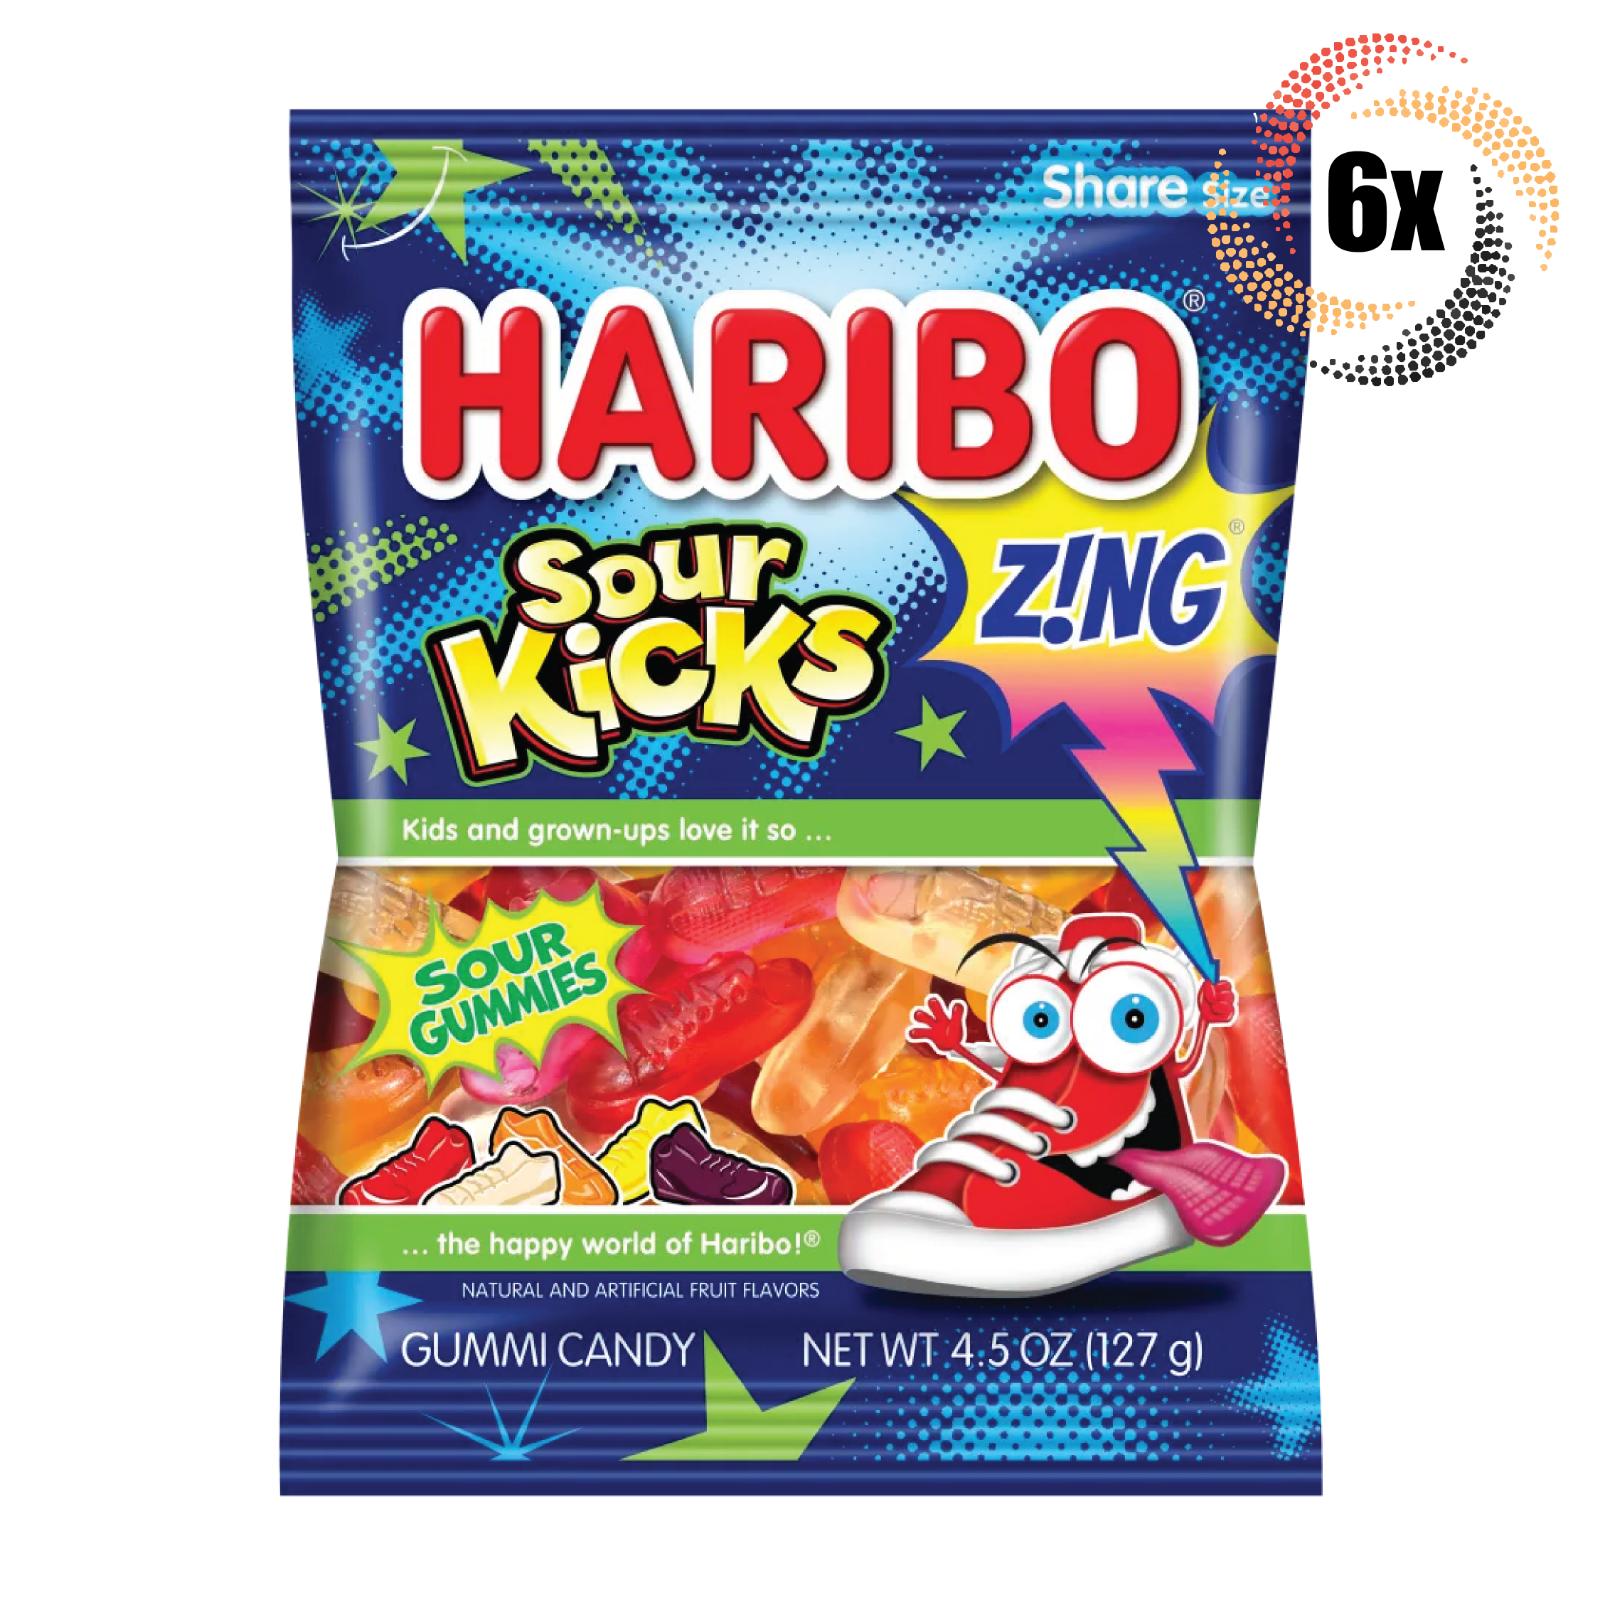 6x Bags Haribo Sour Kicks Z!NG Sour Gummi Candy Peg Bags | Share Size | 4.5oz - $21.93